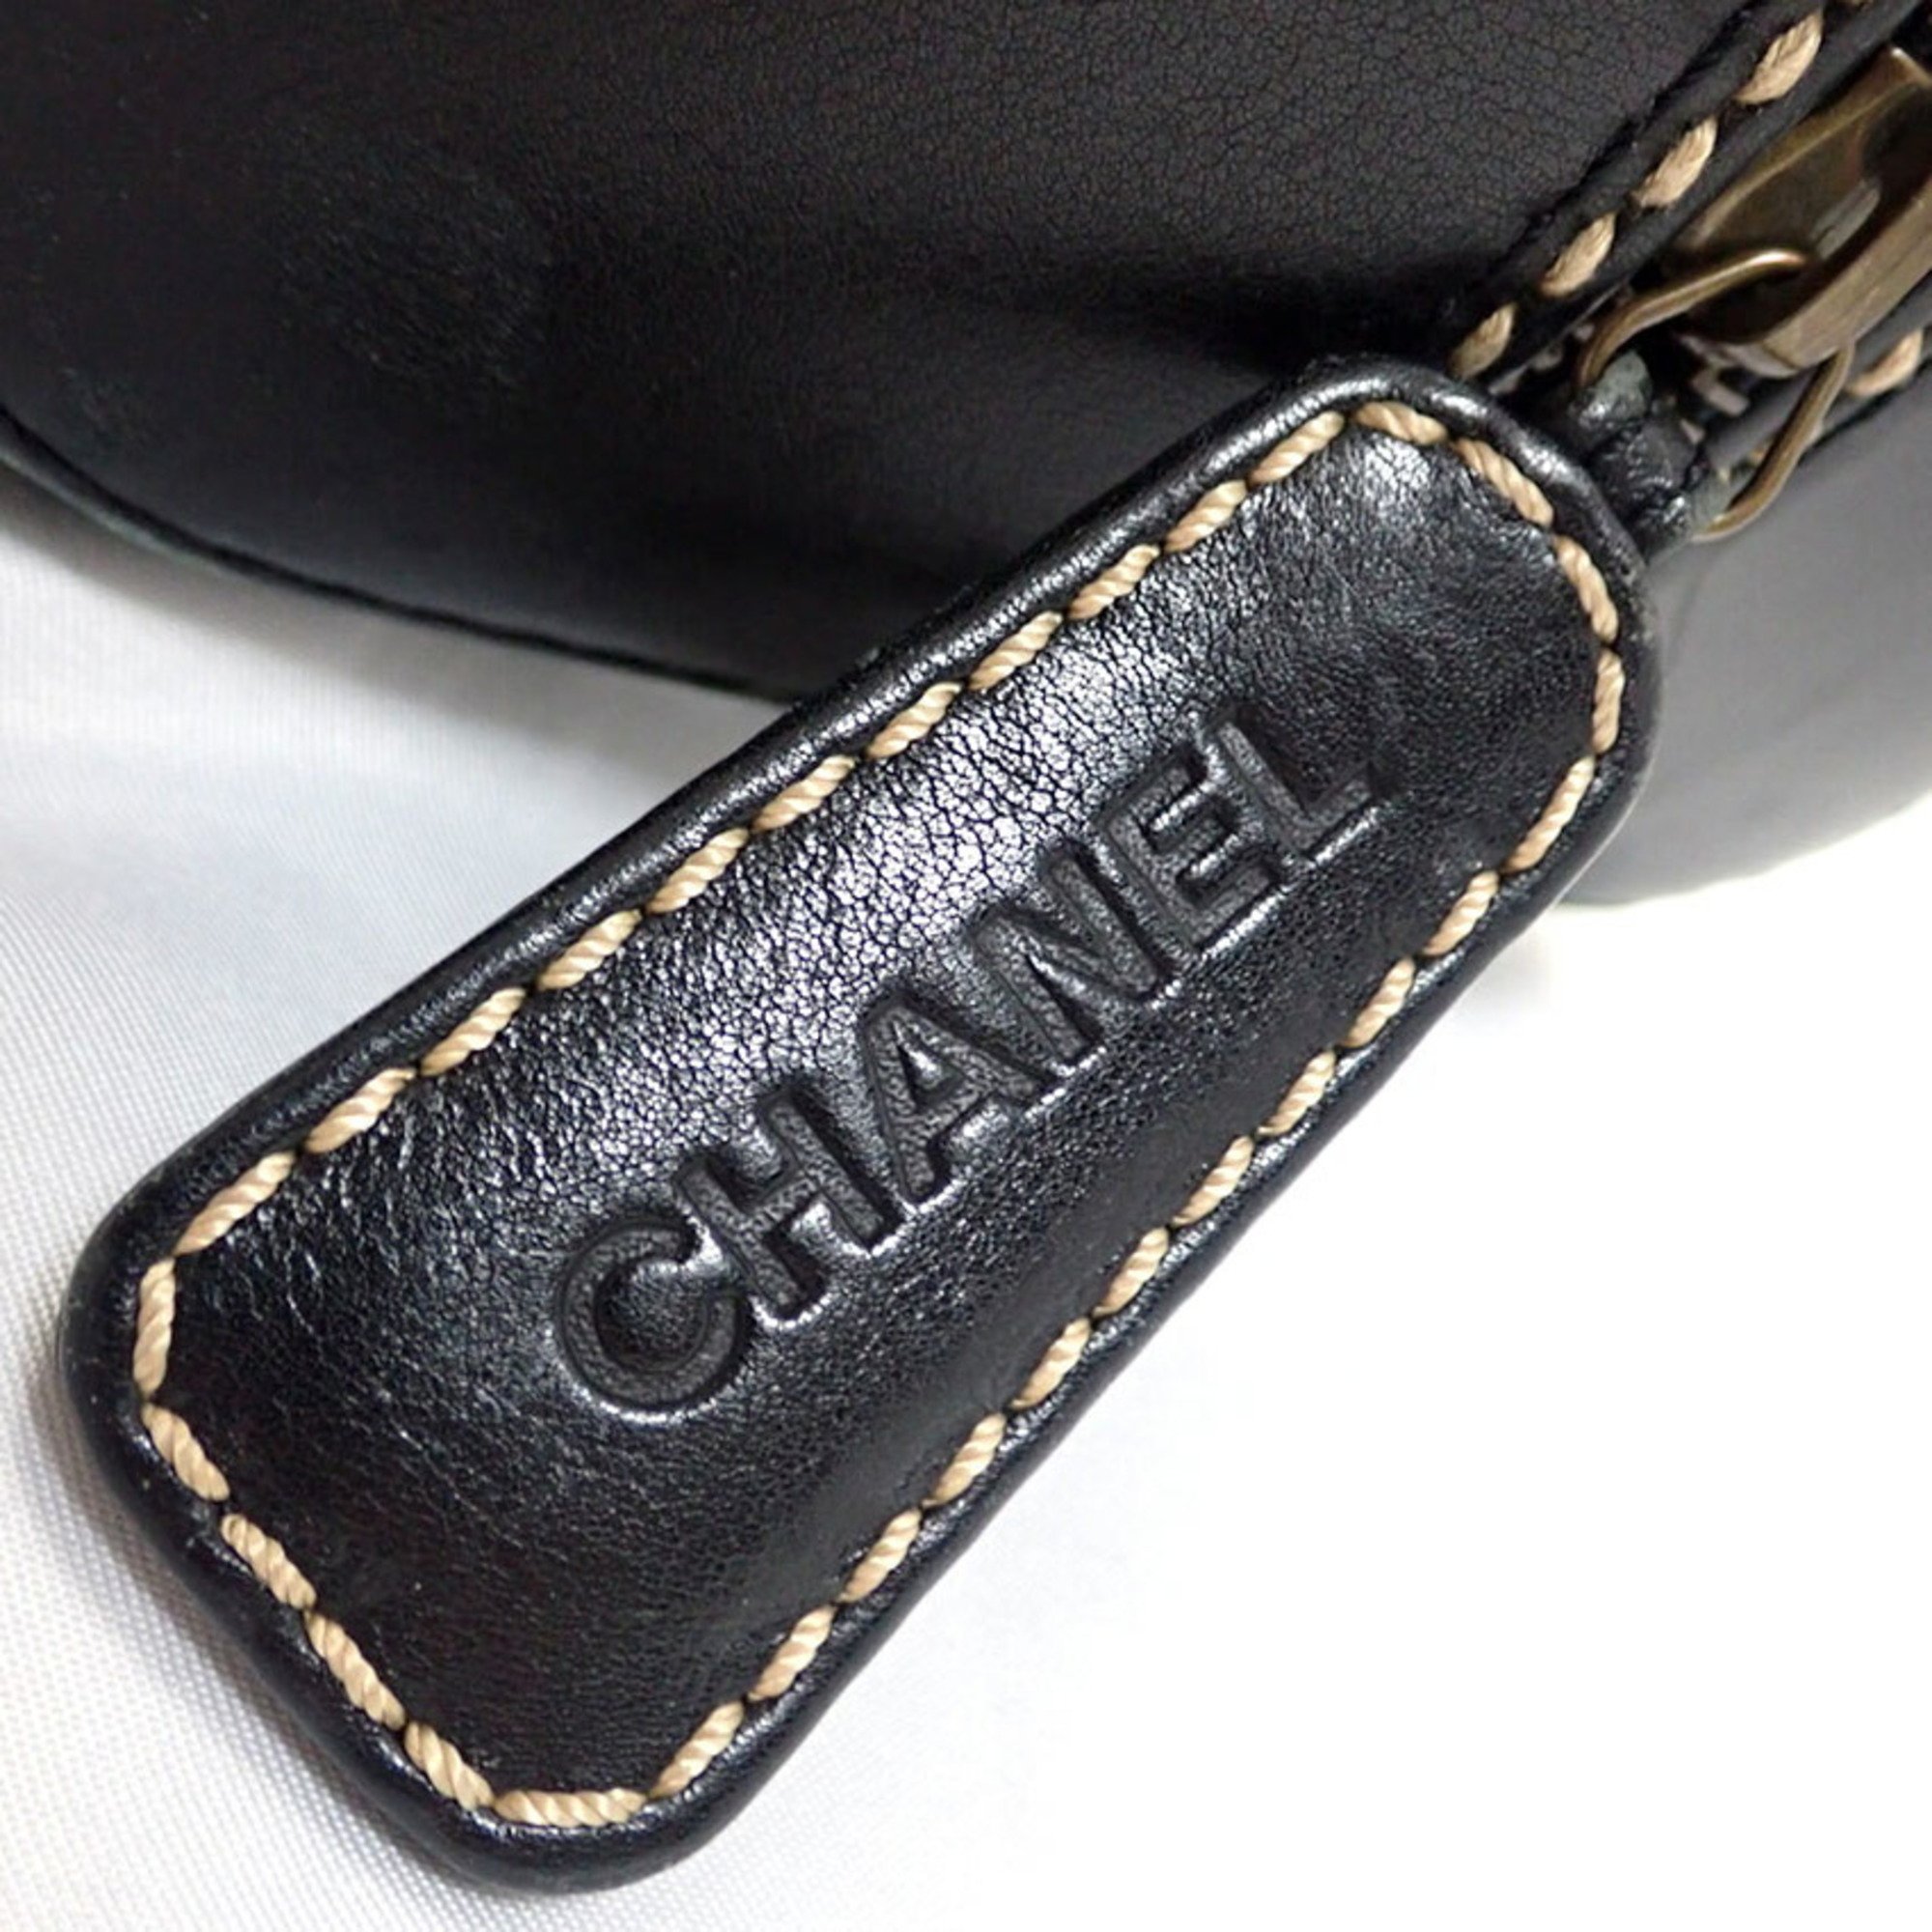 CHANEL Chanel matelasse wild stitch calf leather handbag